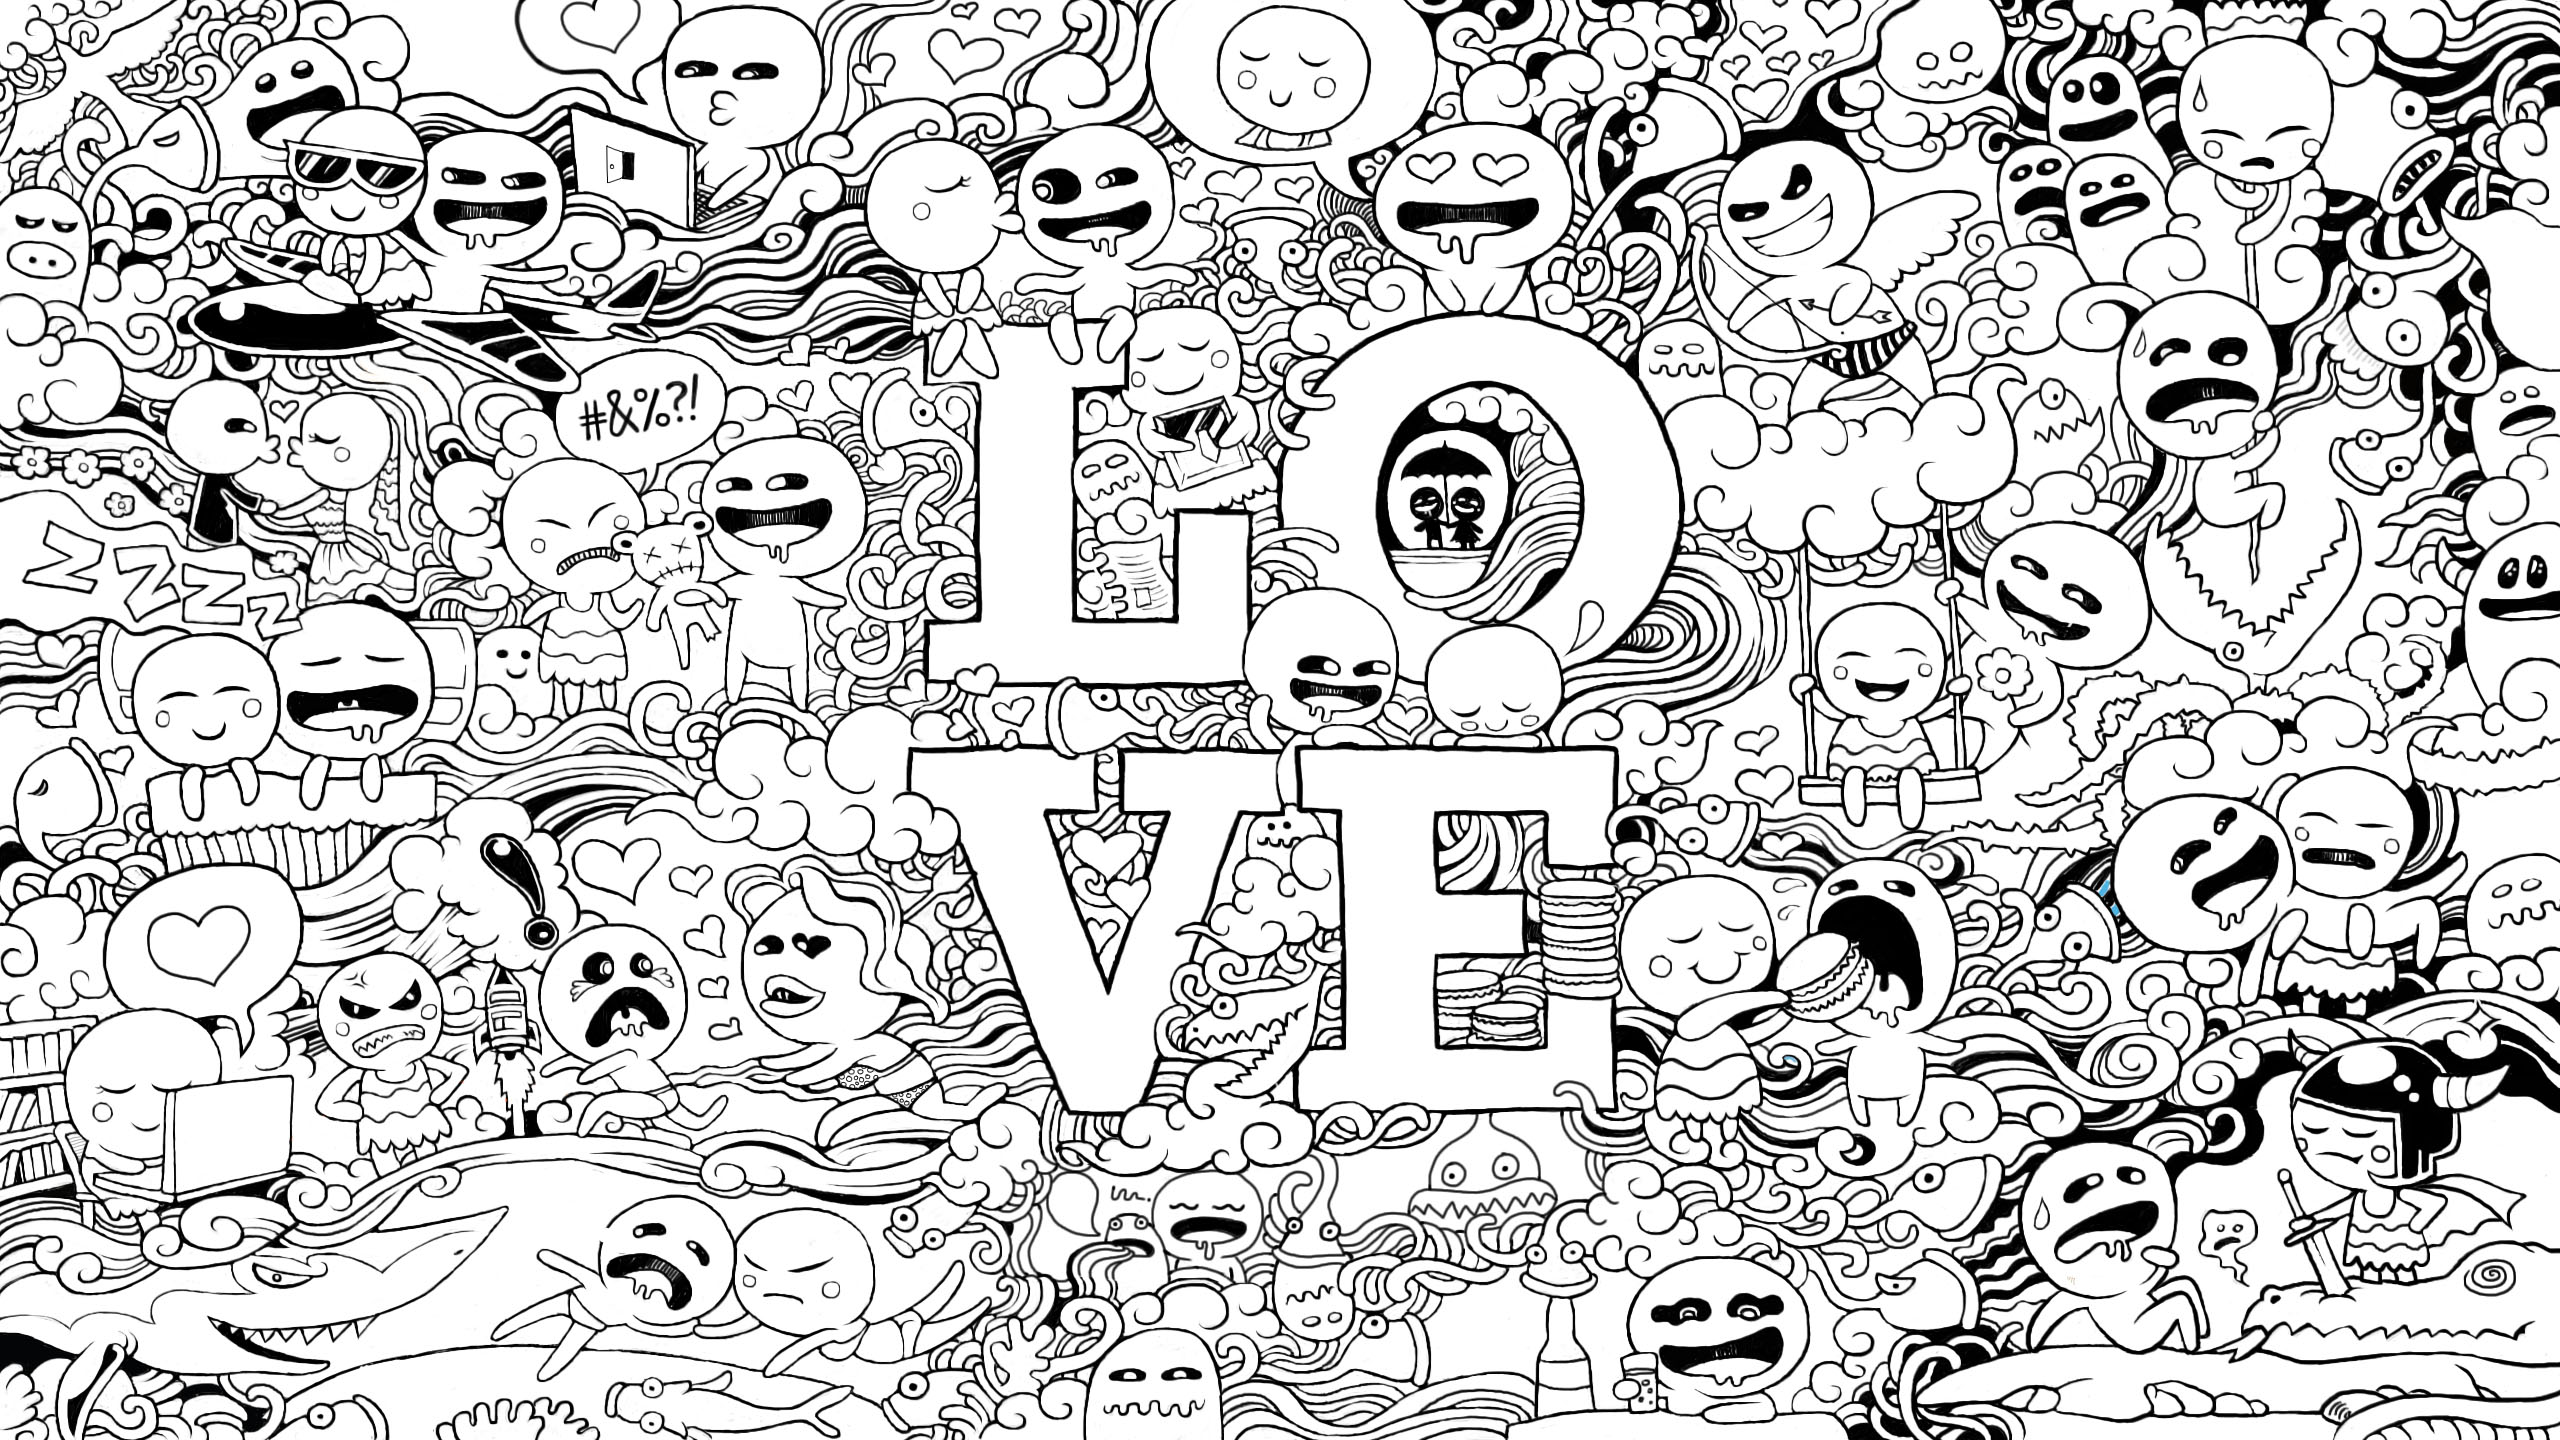 Wallpaper Freebie for February 2013: LOVE Doodles